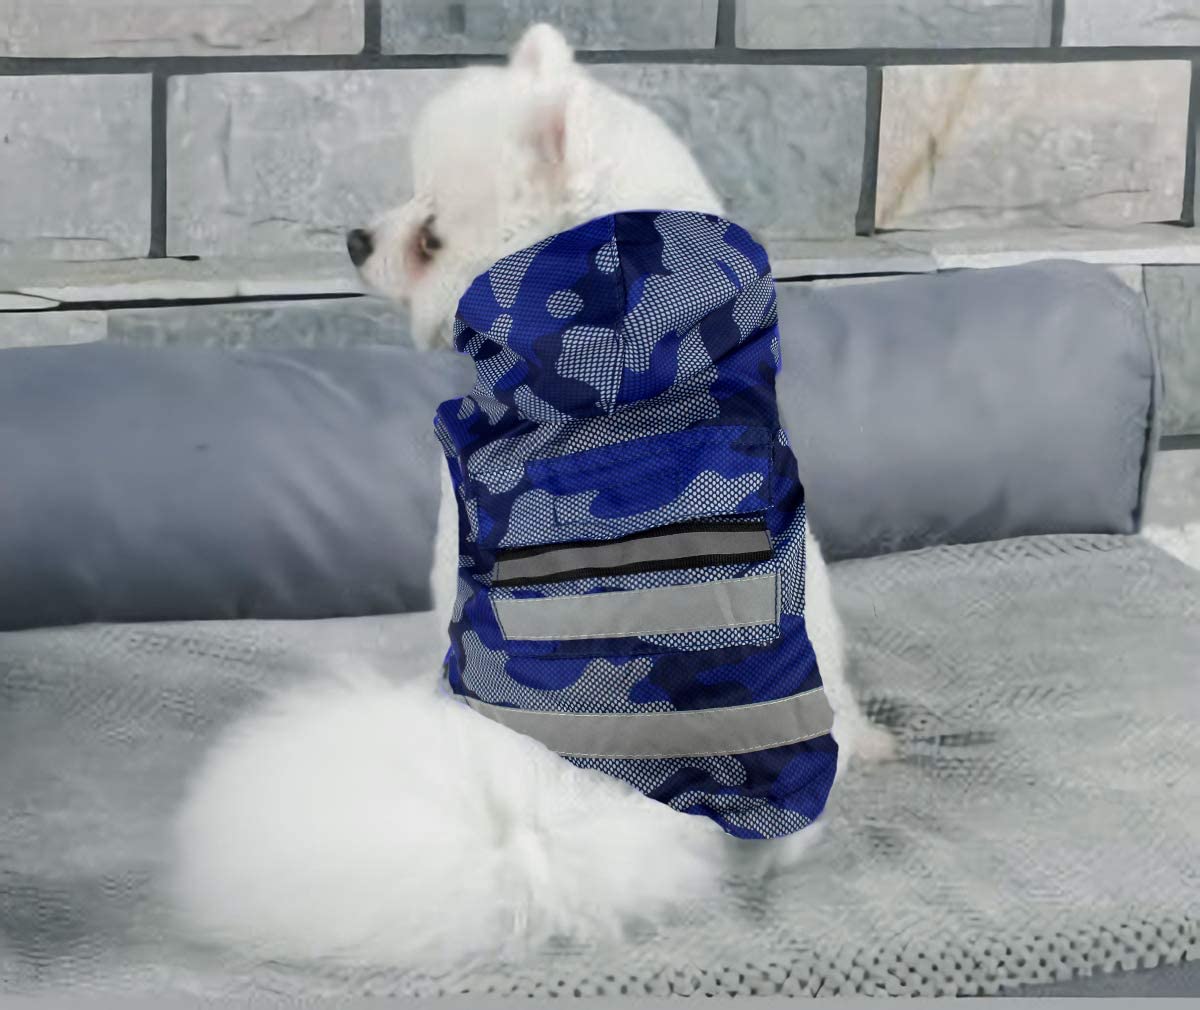  Babydog Abrigo Chaleco Impermeable para Perro con Capucha, Forro Transpirable y Sin Mangas, Cierre Velcro, Bolsillo Espalda, Modelo Camuflaje Militar (XL, Azul) 